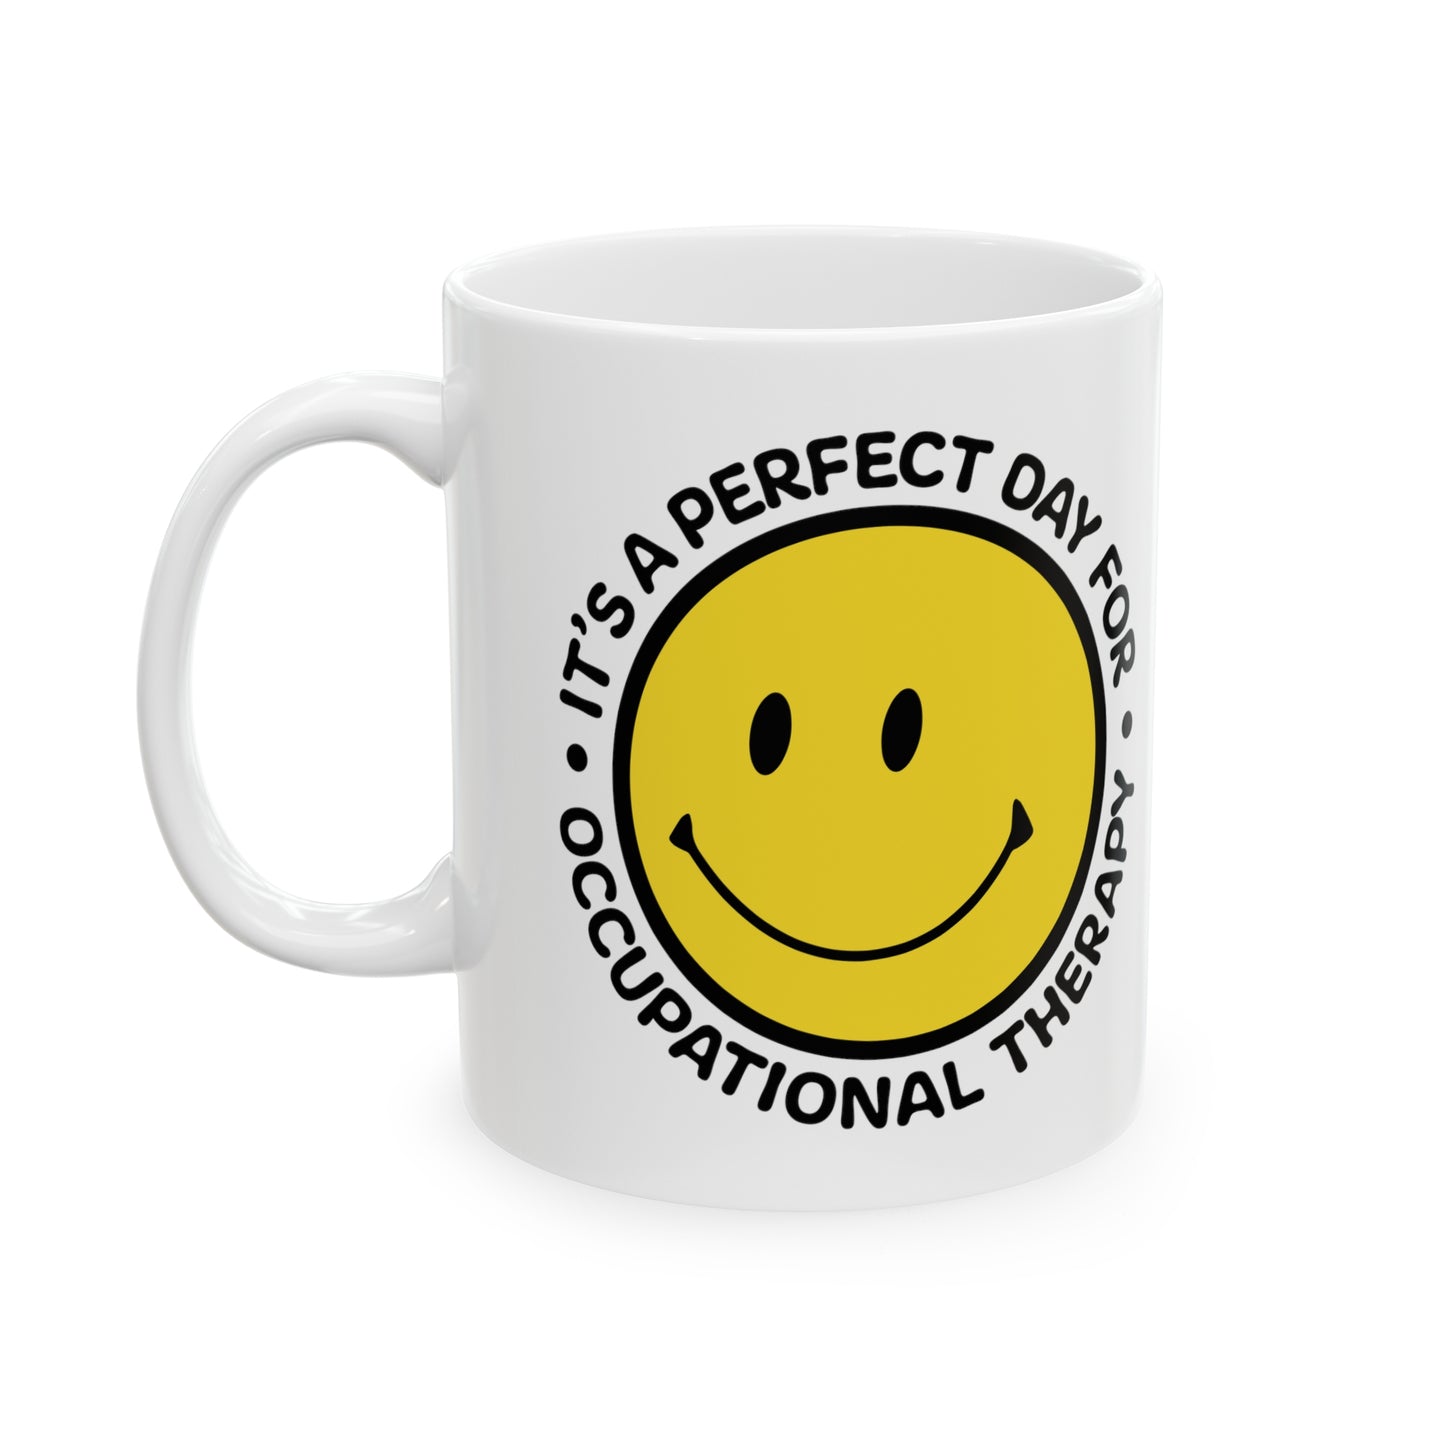 It's A Perfect Day For Occupational Therapy Mugs, OT Mugs, Therapist Mugs